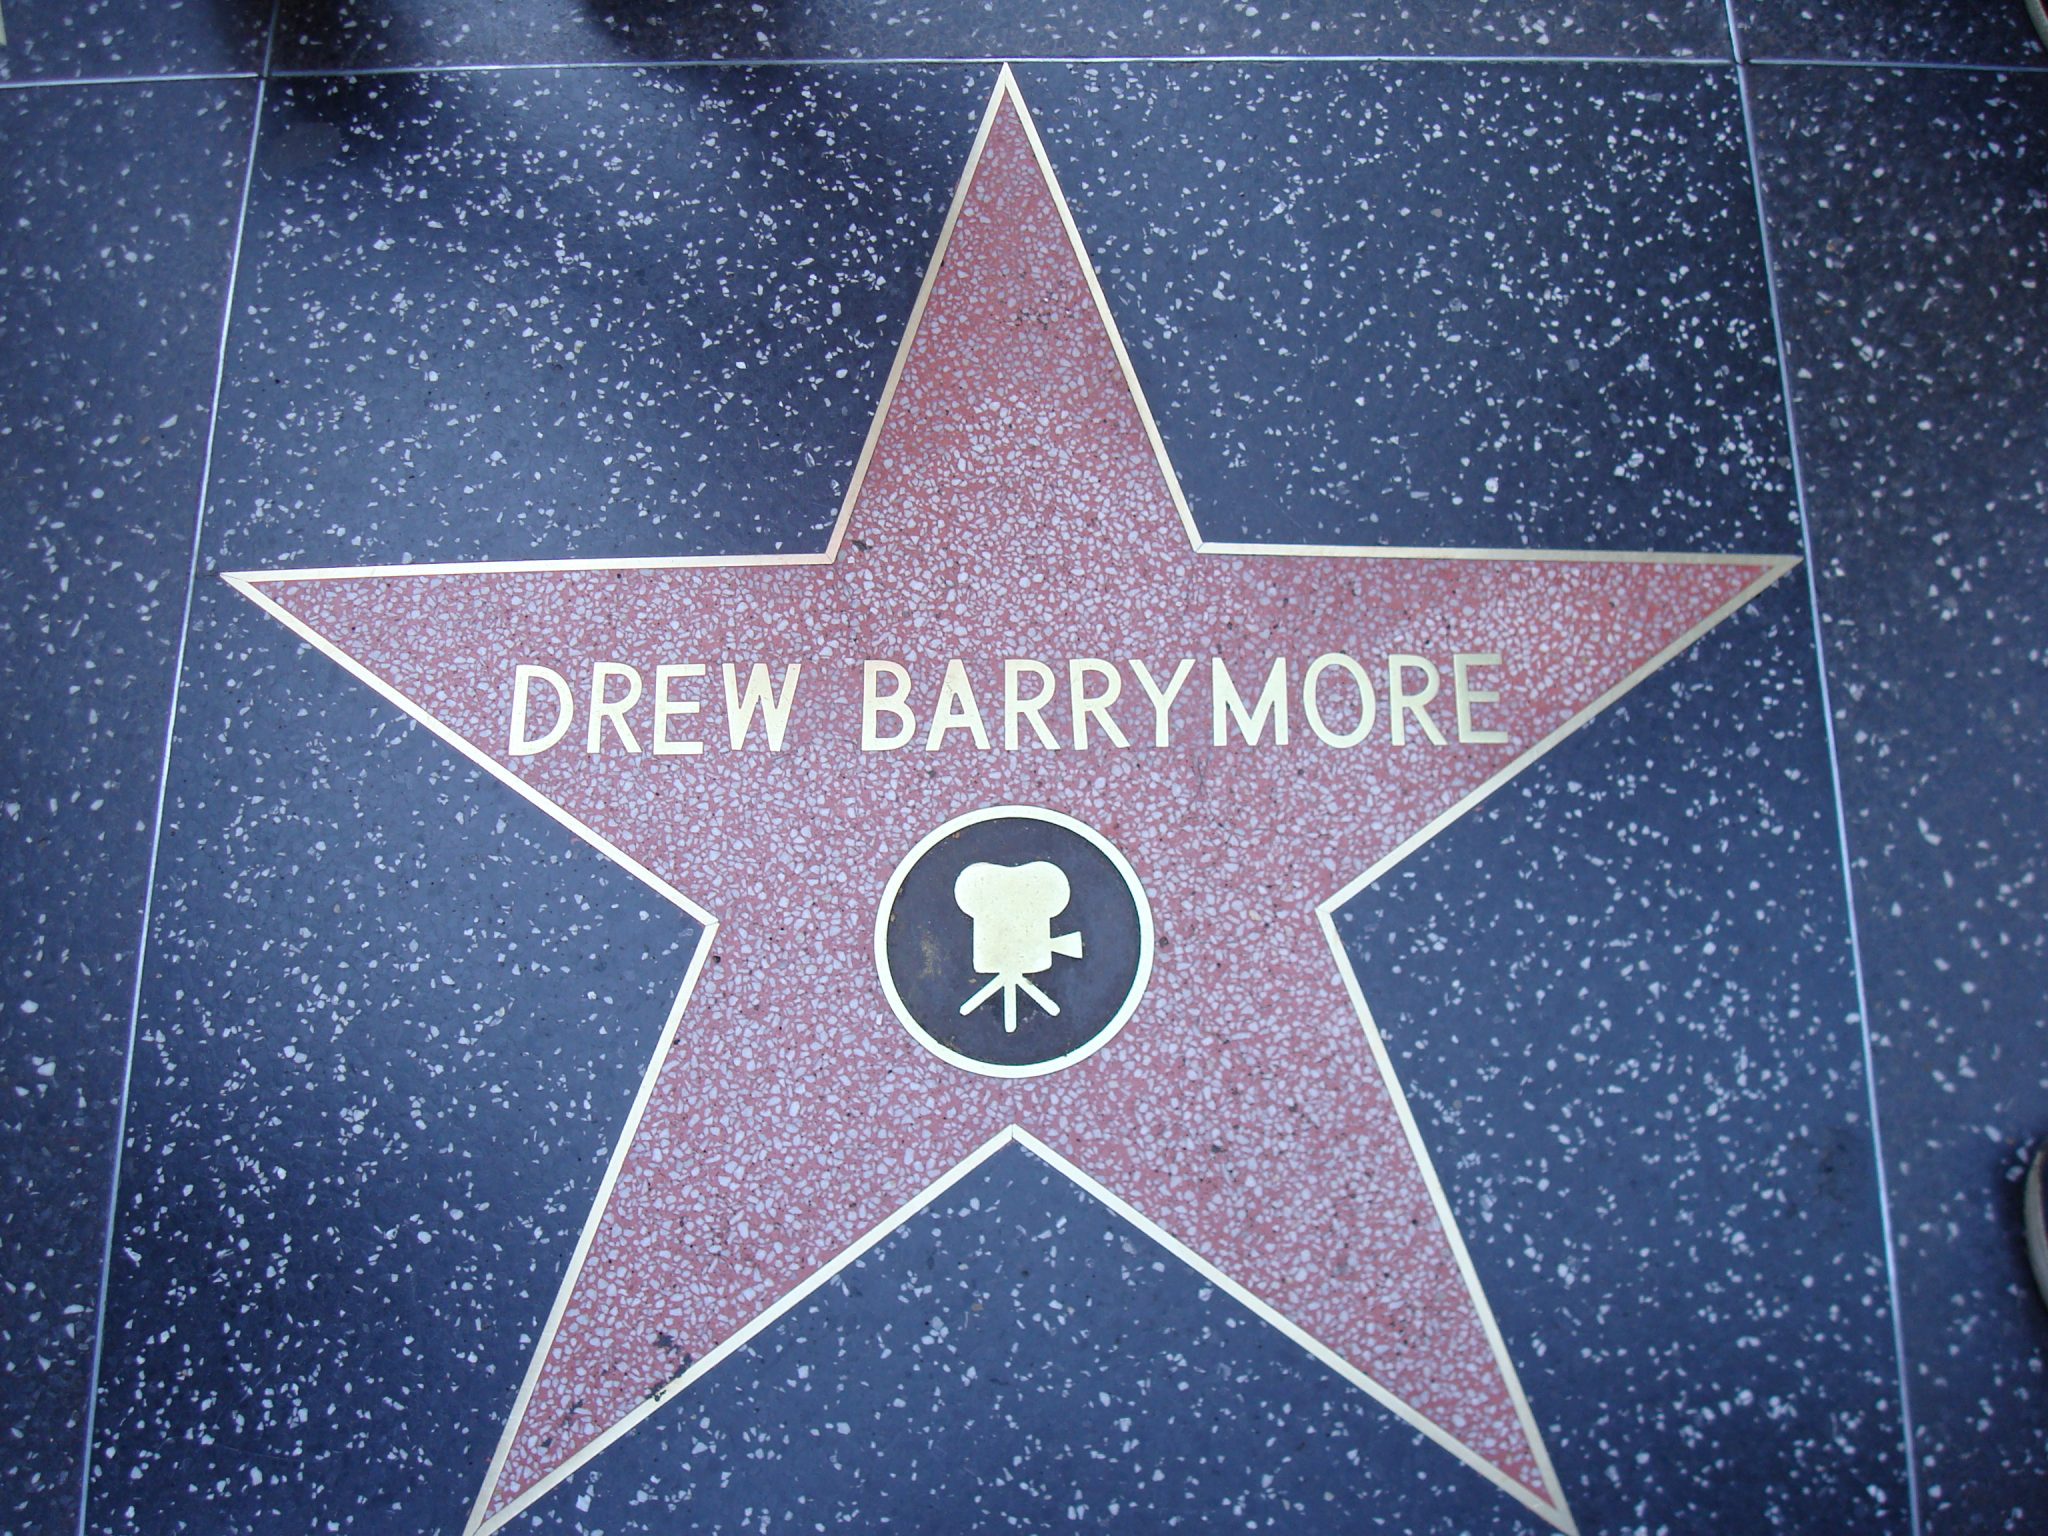 Drew Barrymore, zvijezda Walk of Fame na Hollywood Blvd.